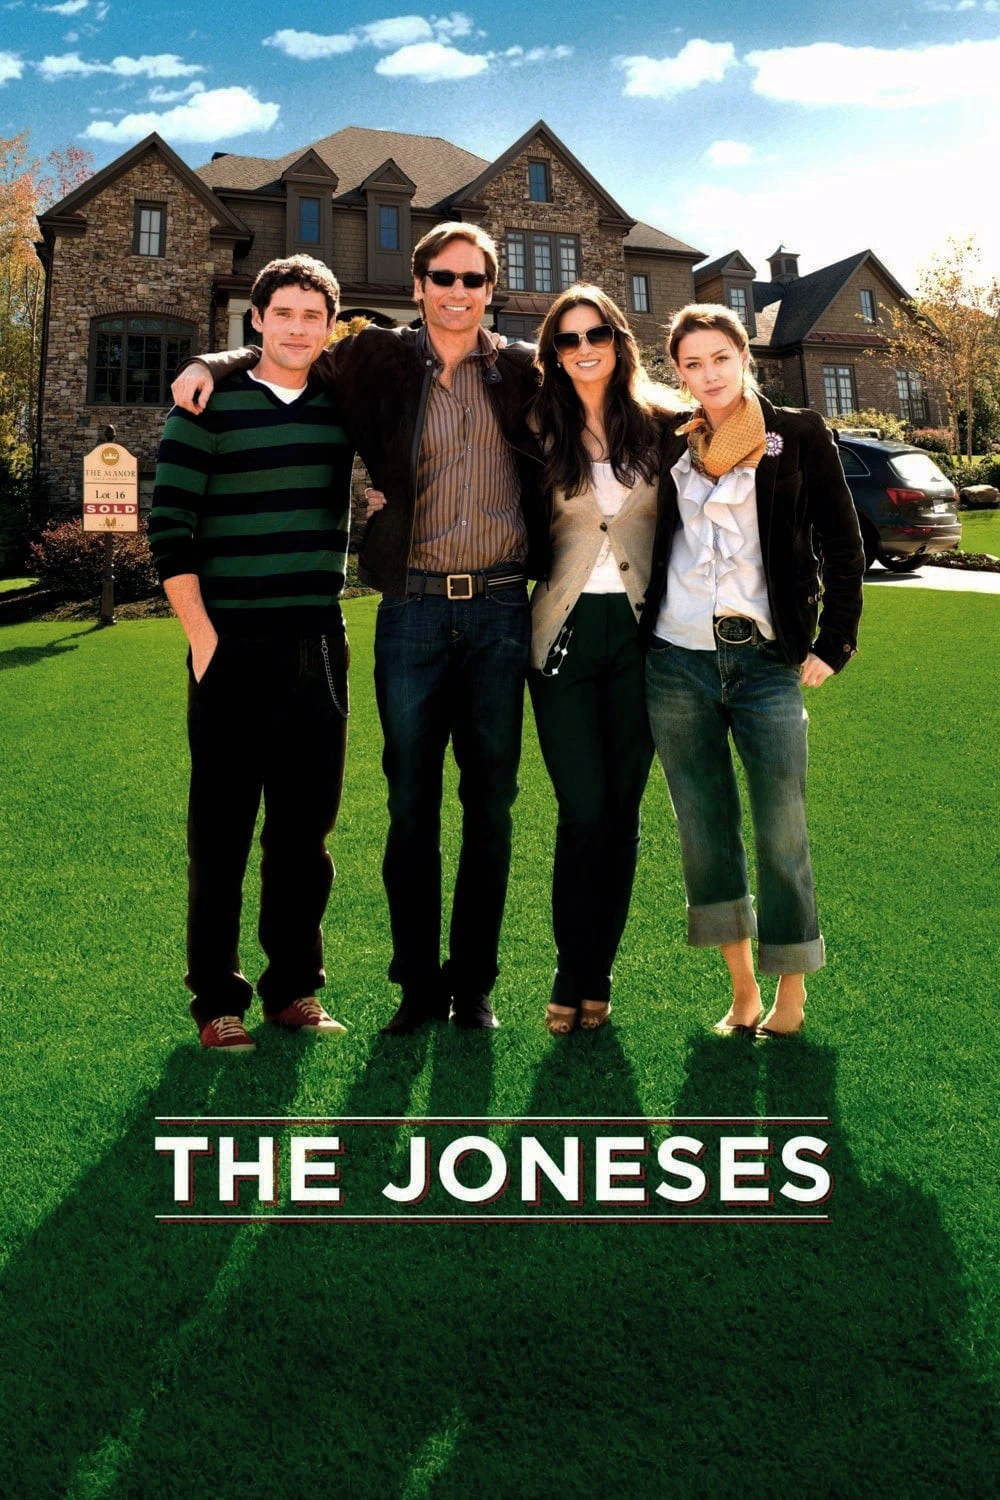 The Joneses | The Joneses (2010)